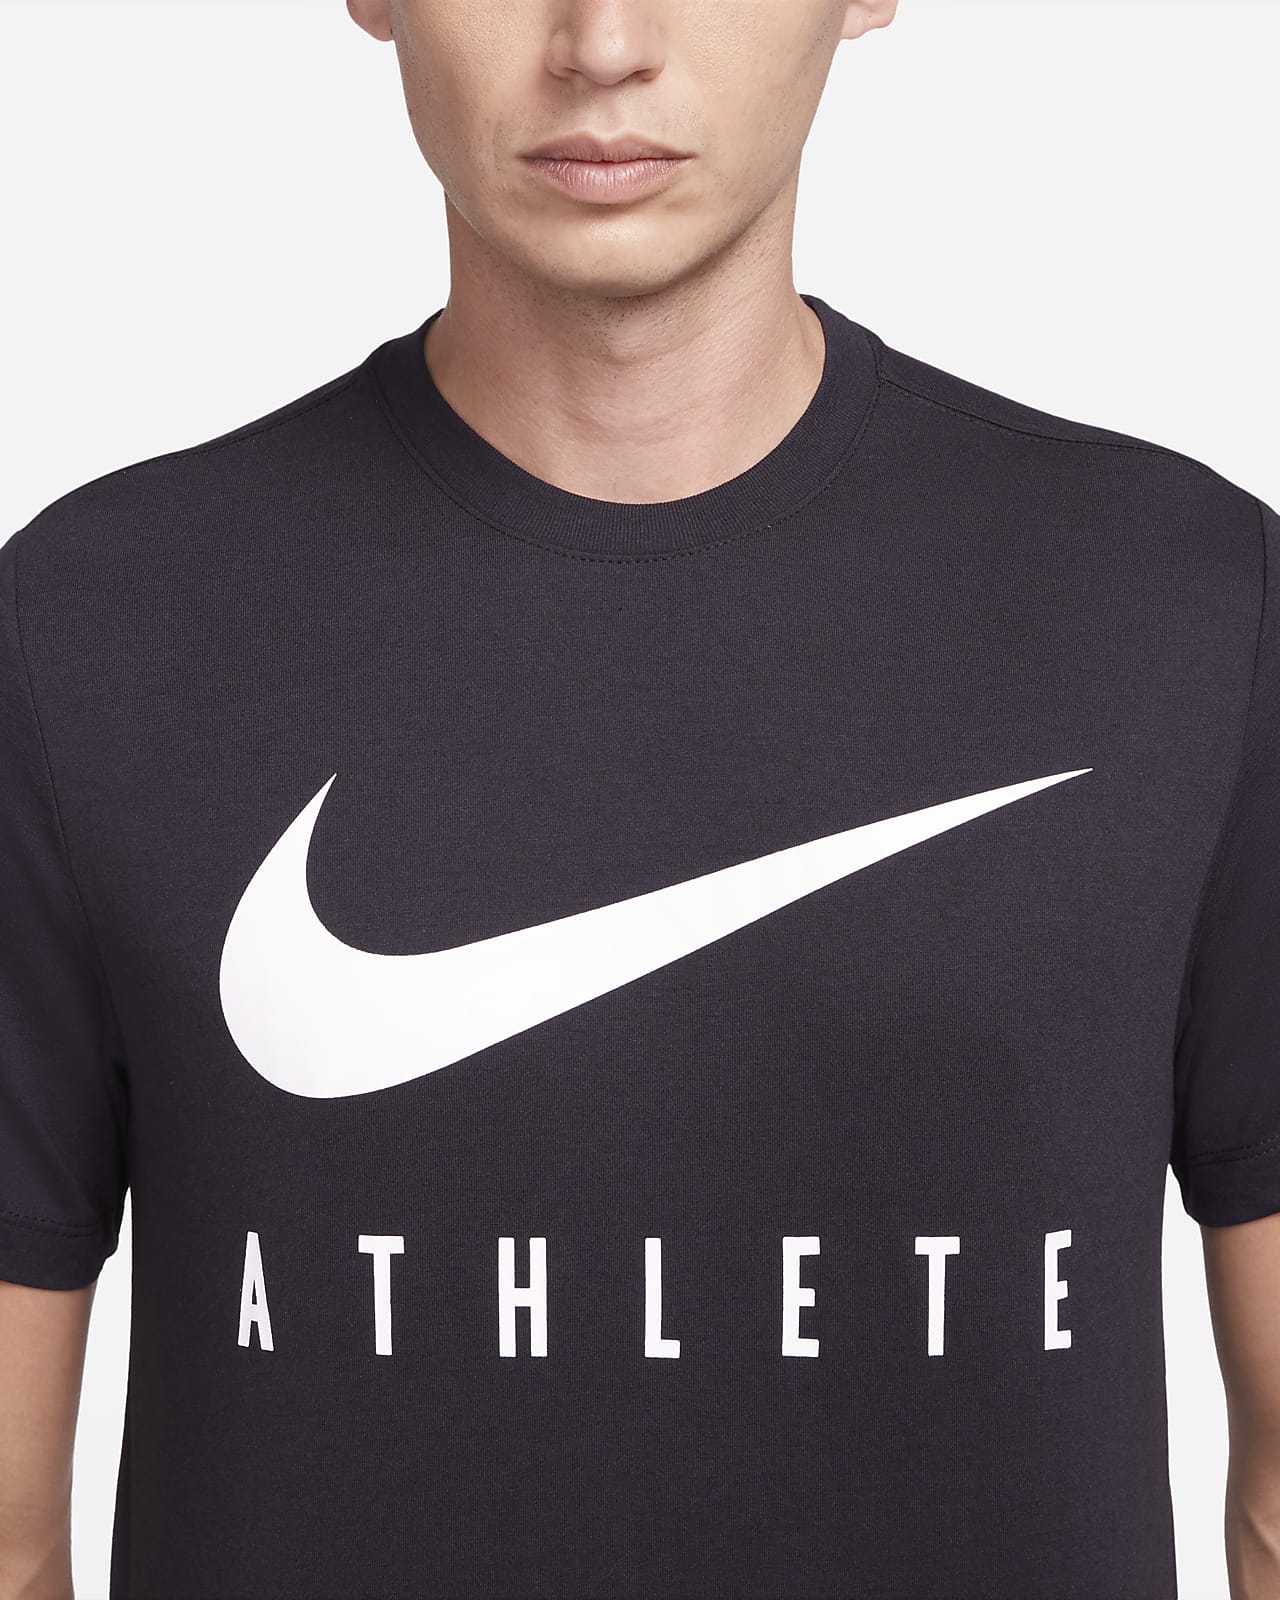 Nike Dri-FIT Men's Training T-Shirt. Nike LU